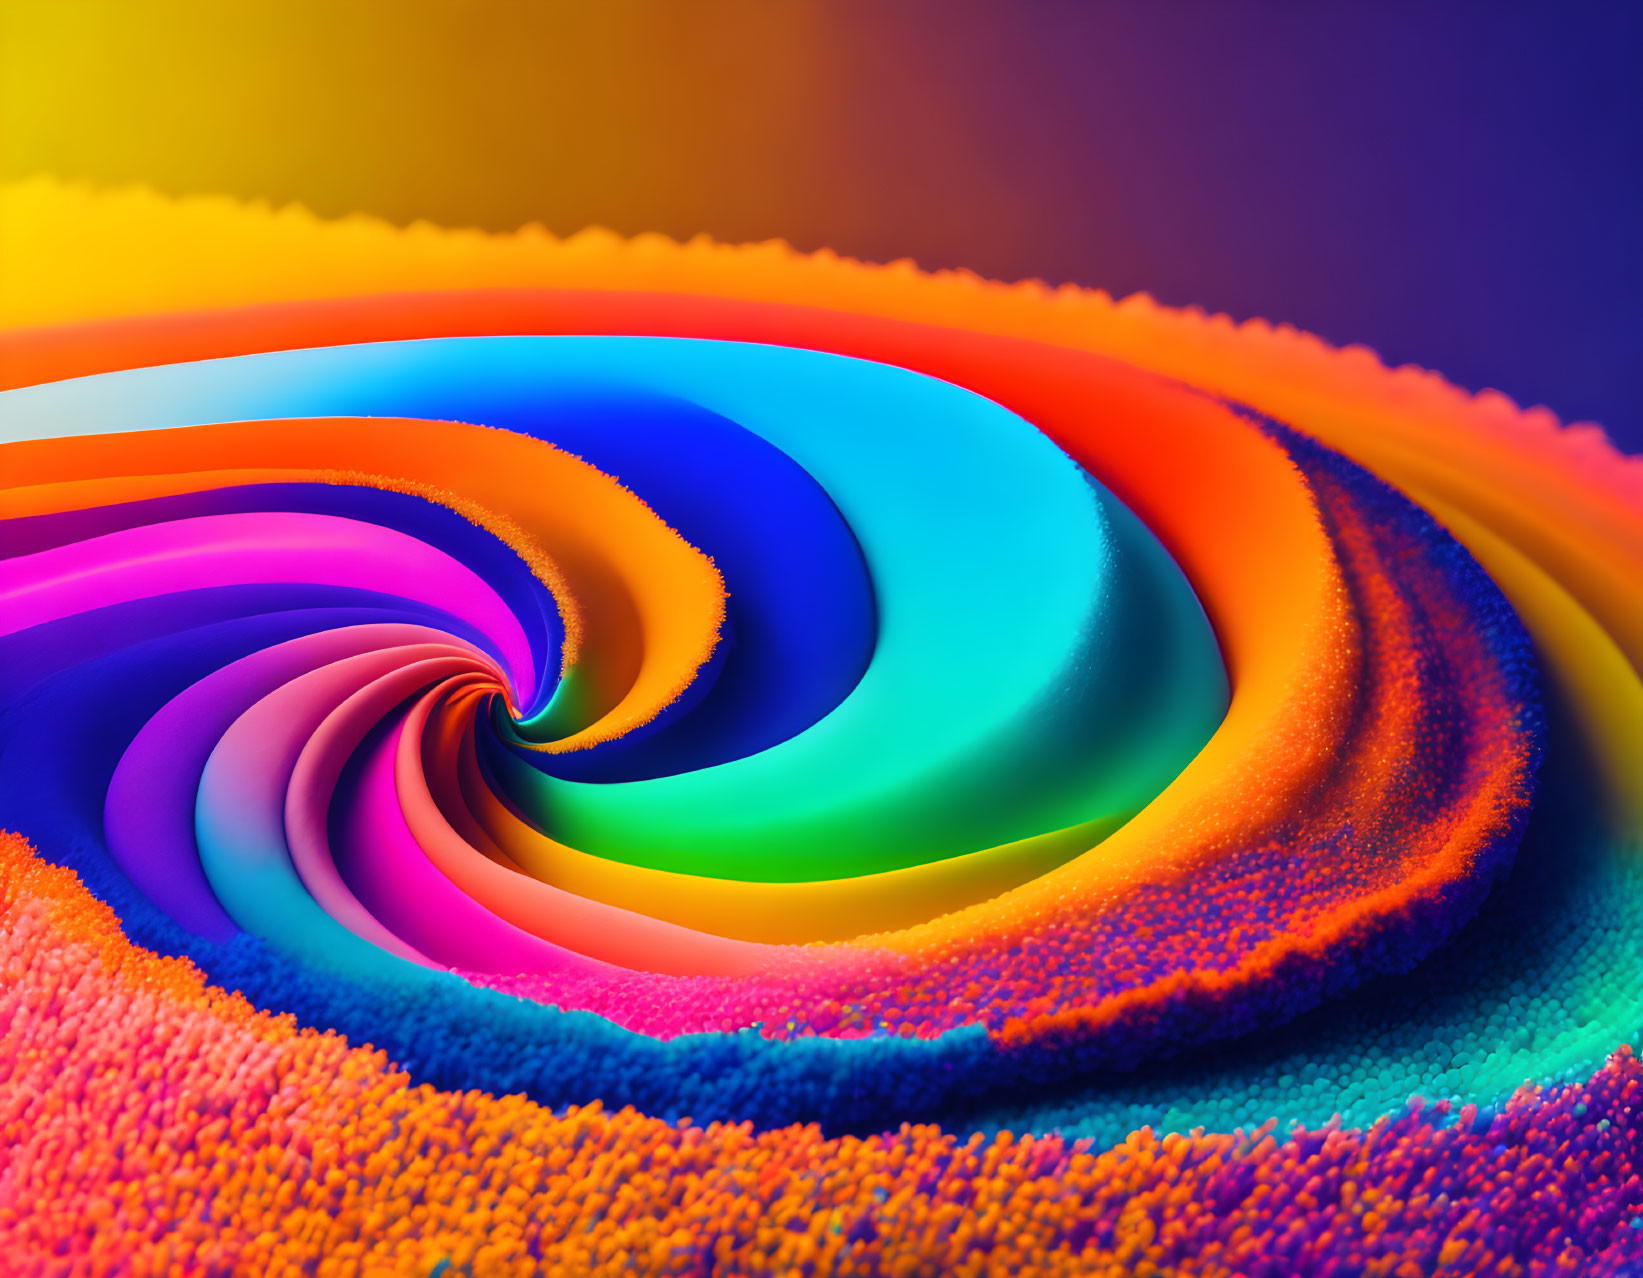 Neon rainbow vortex on textured background: Mesmerizing abstract art